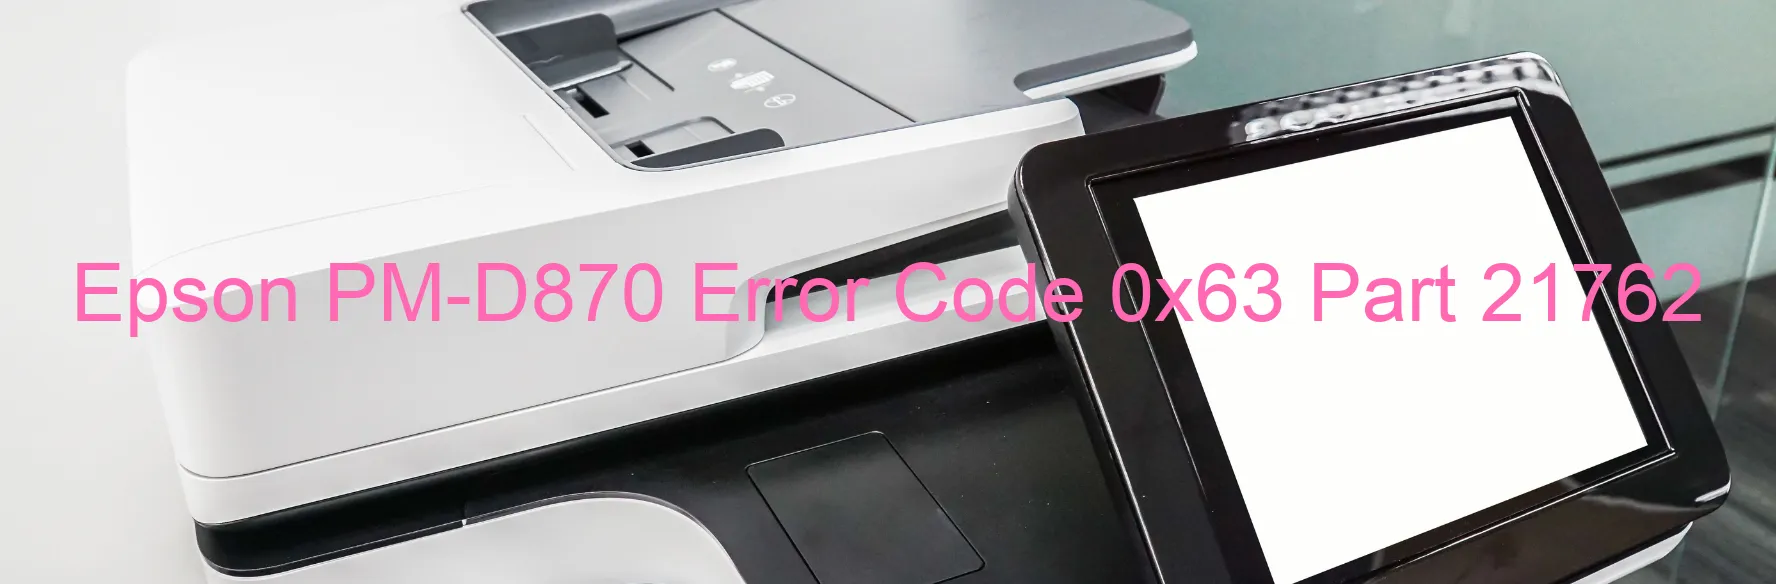 Epson PM-D870 Error Code 0x63 Part 21762